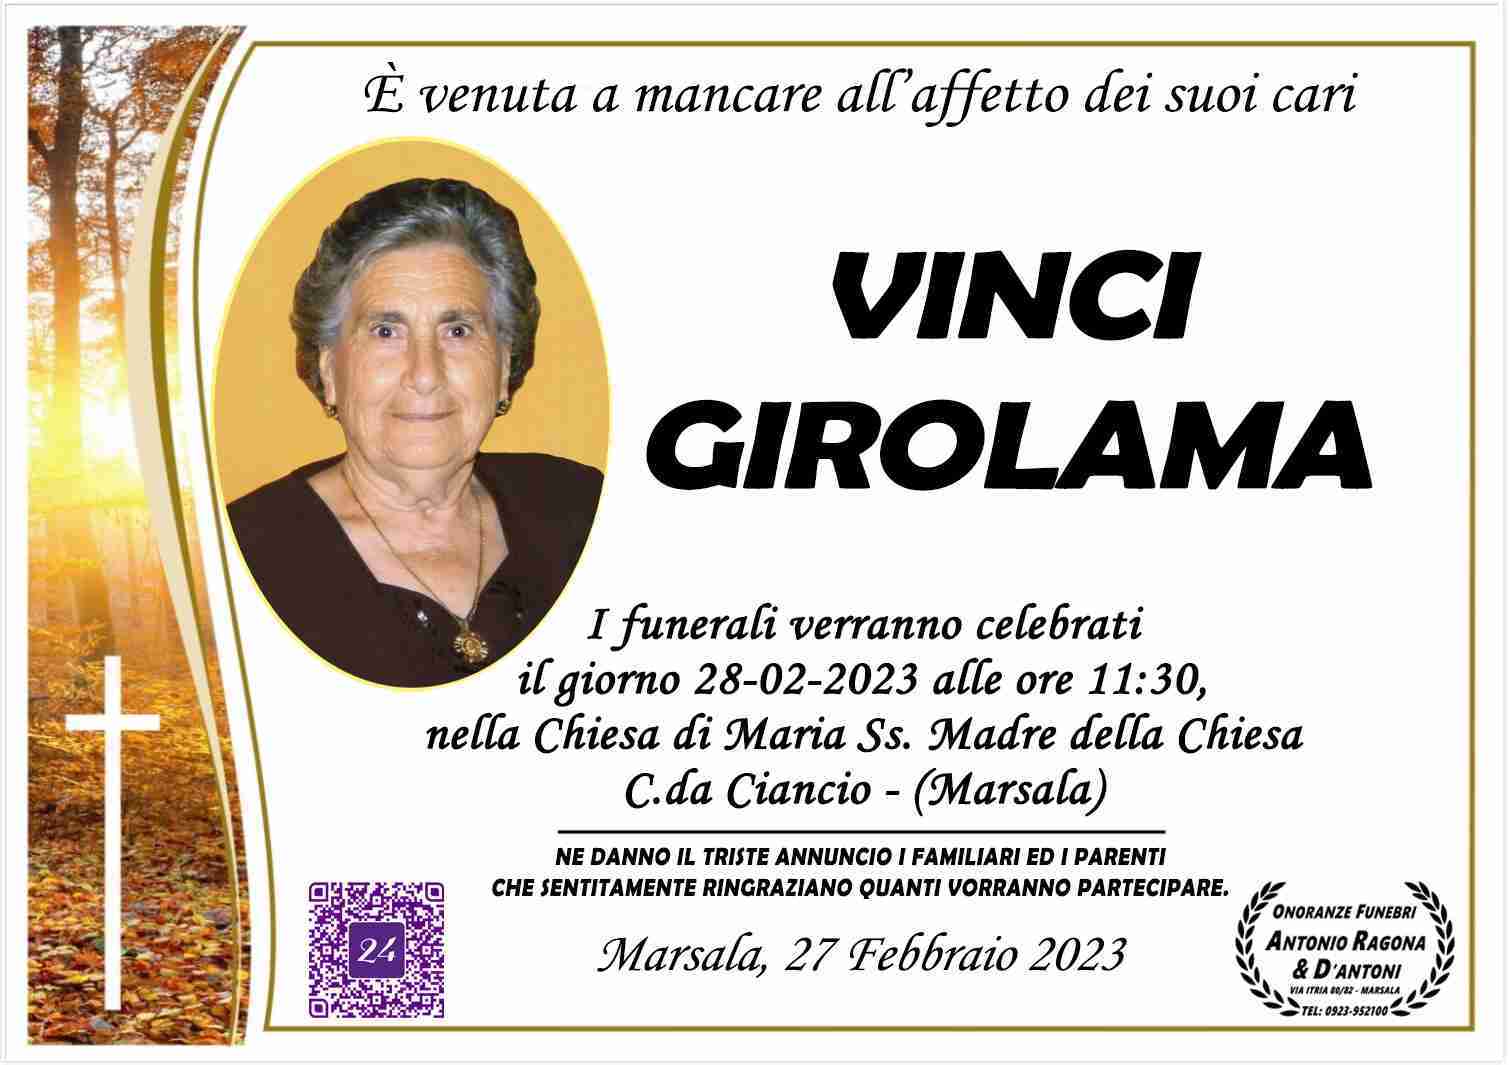 Girolama Vinci